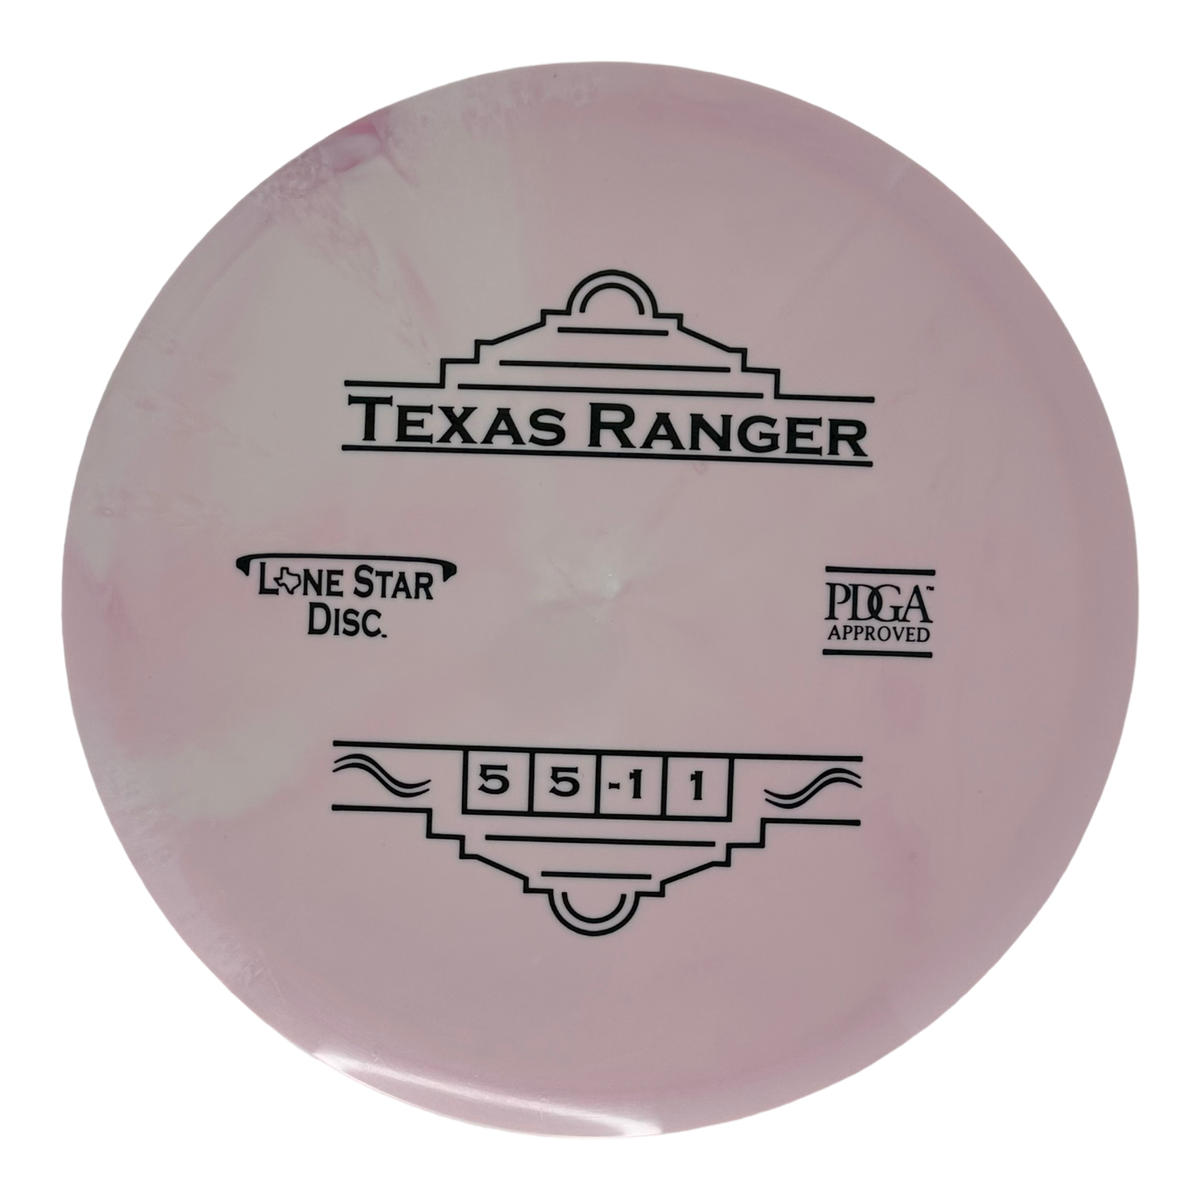 Lone Star Disc Lima Texas Ranger